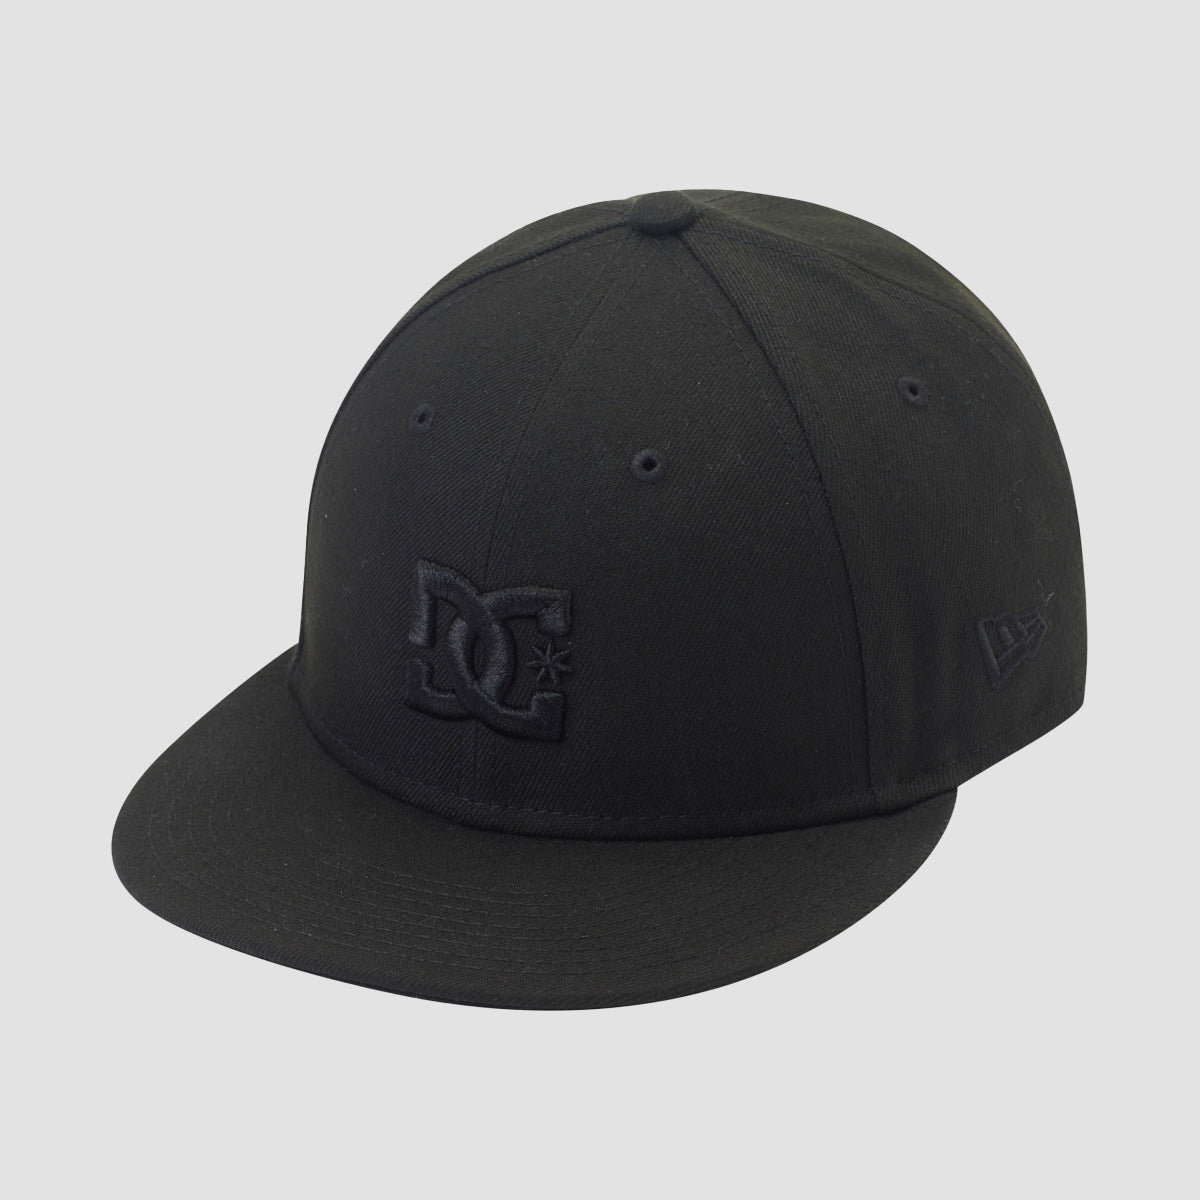 DC New Era 59/50 Low Profile Cap Black/Black